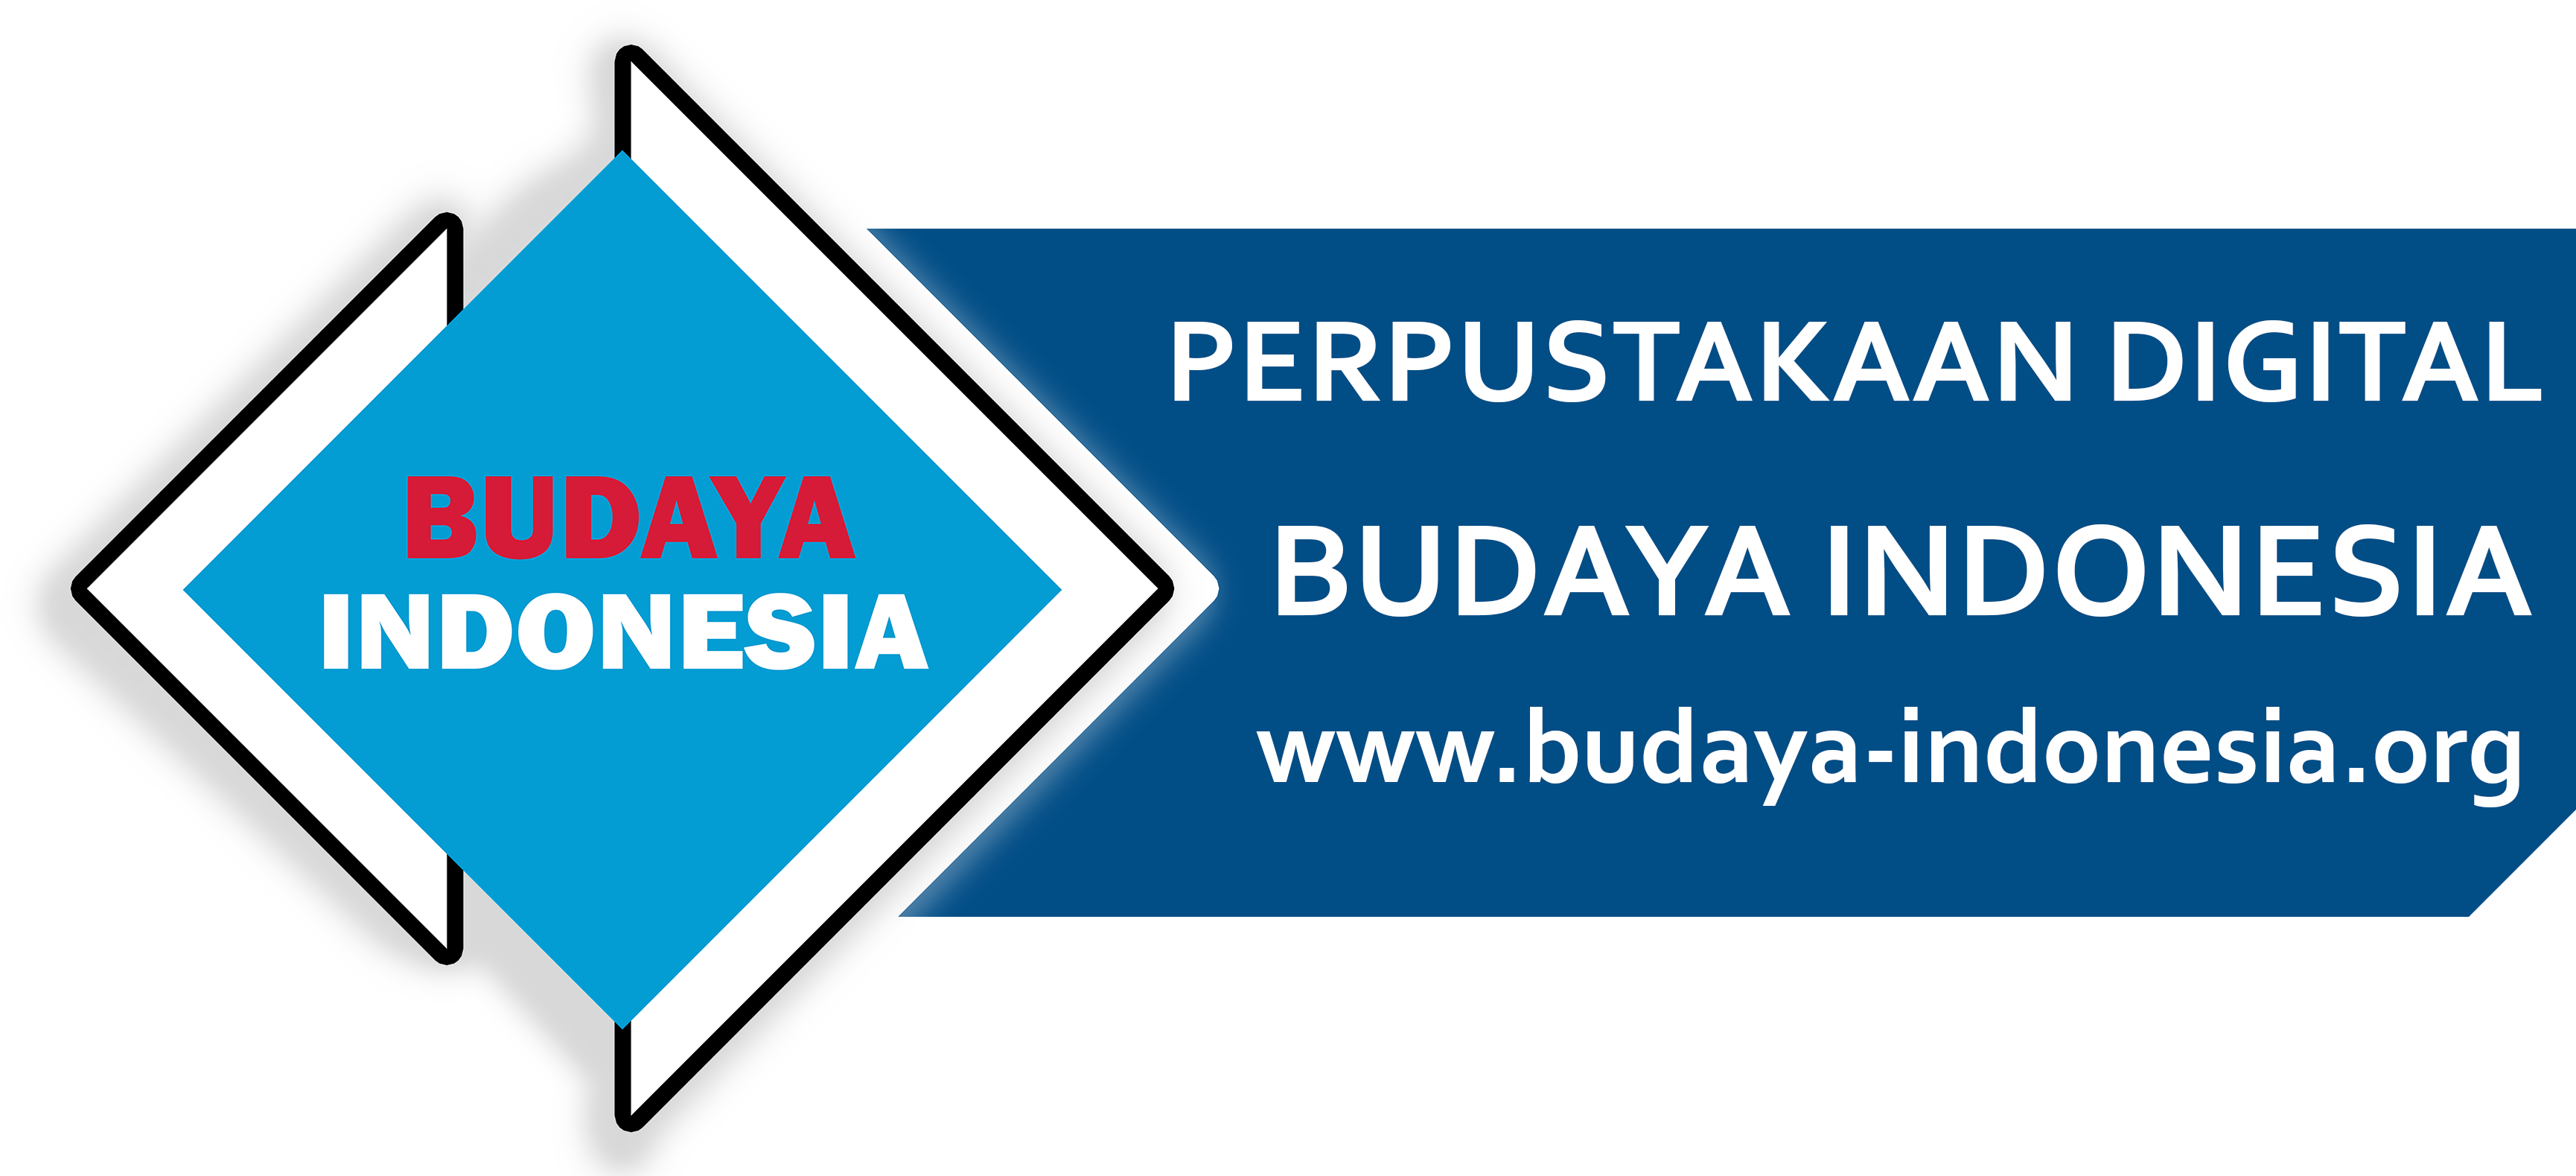 http://budaya-indonesia.org